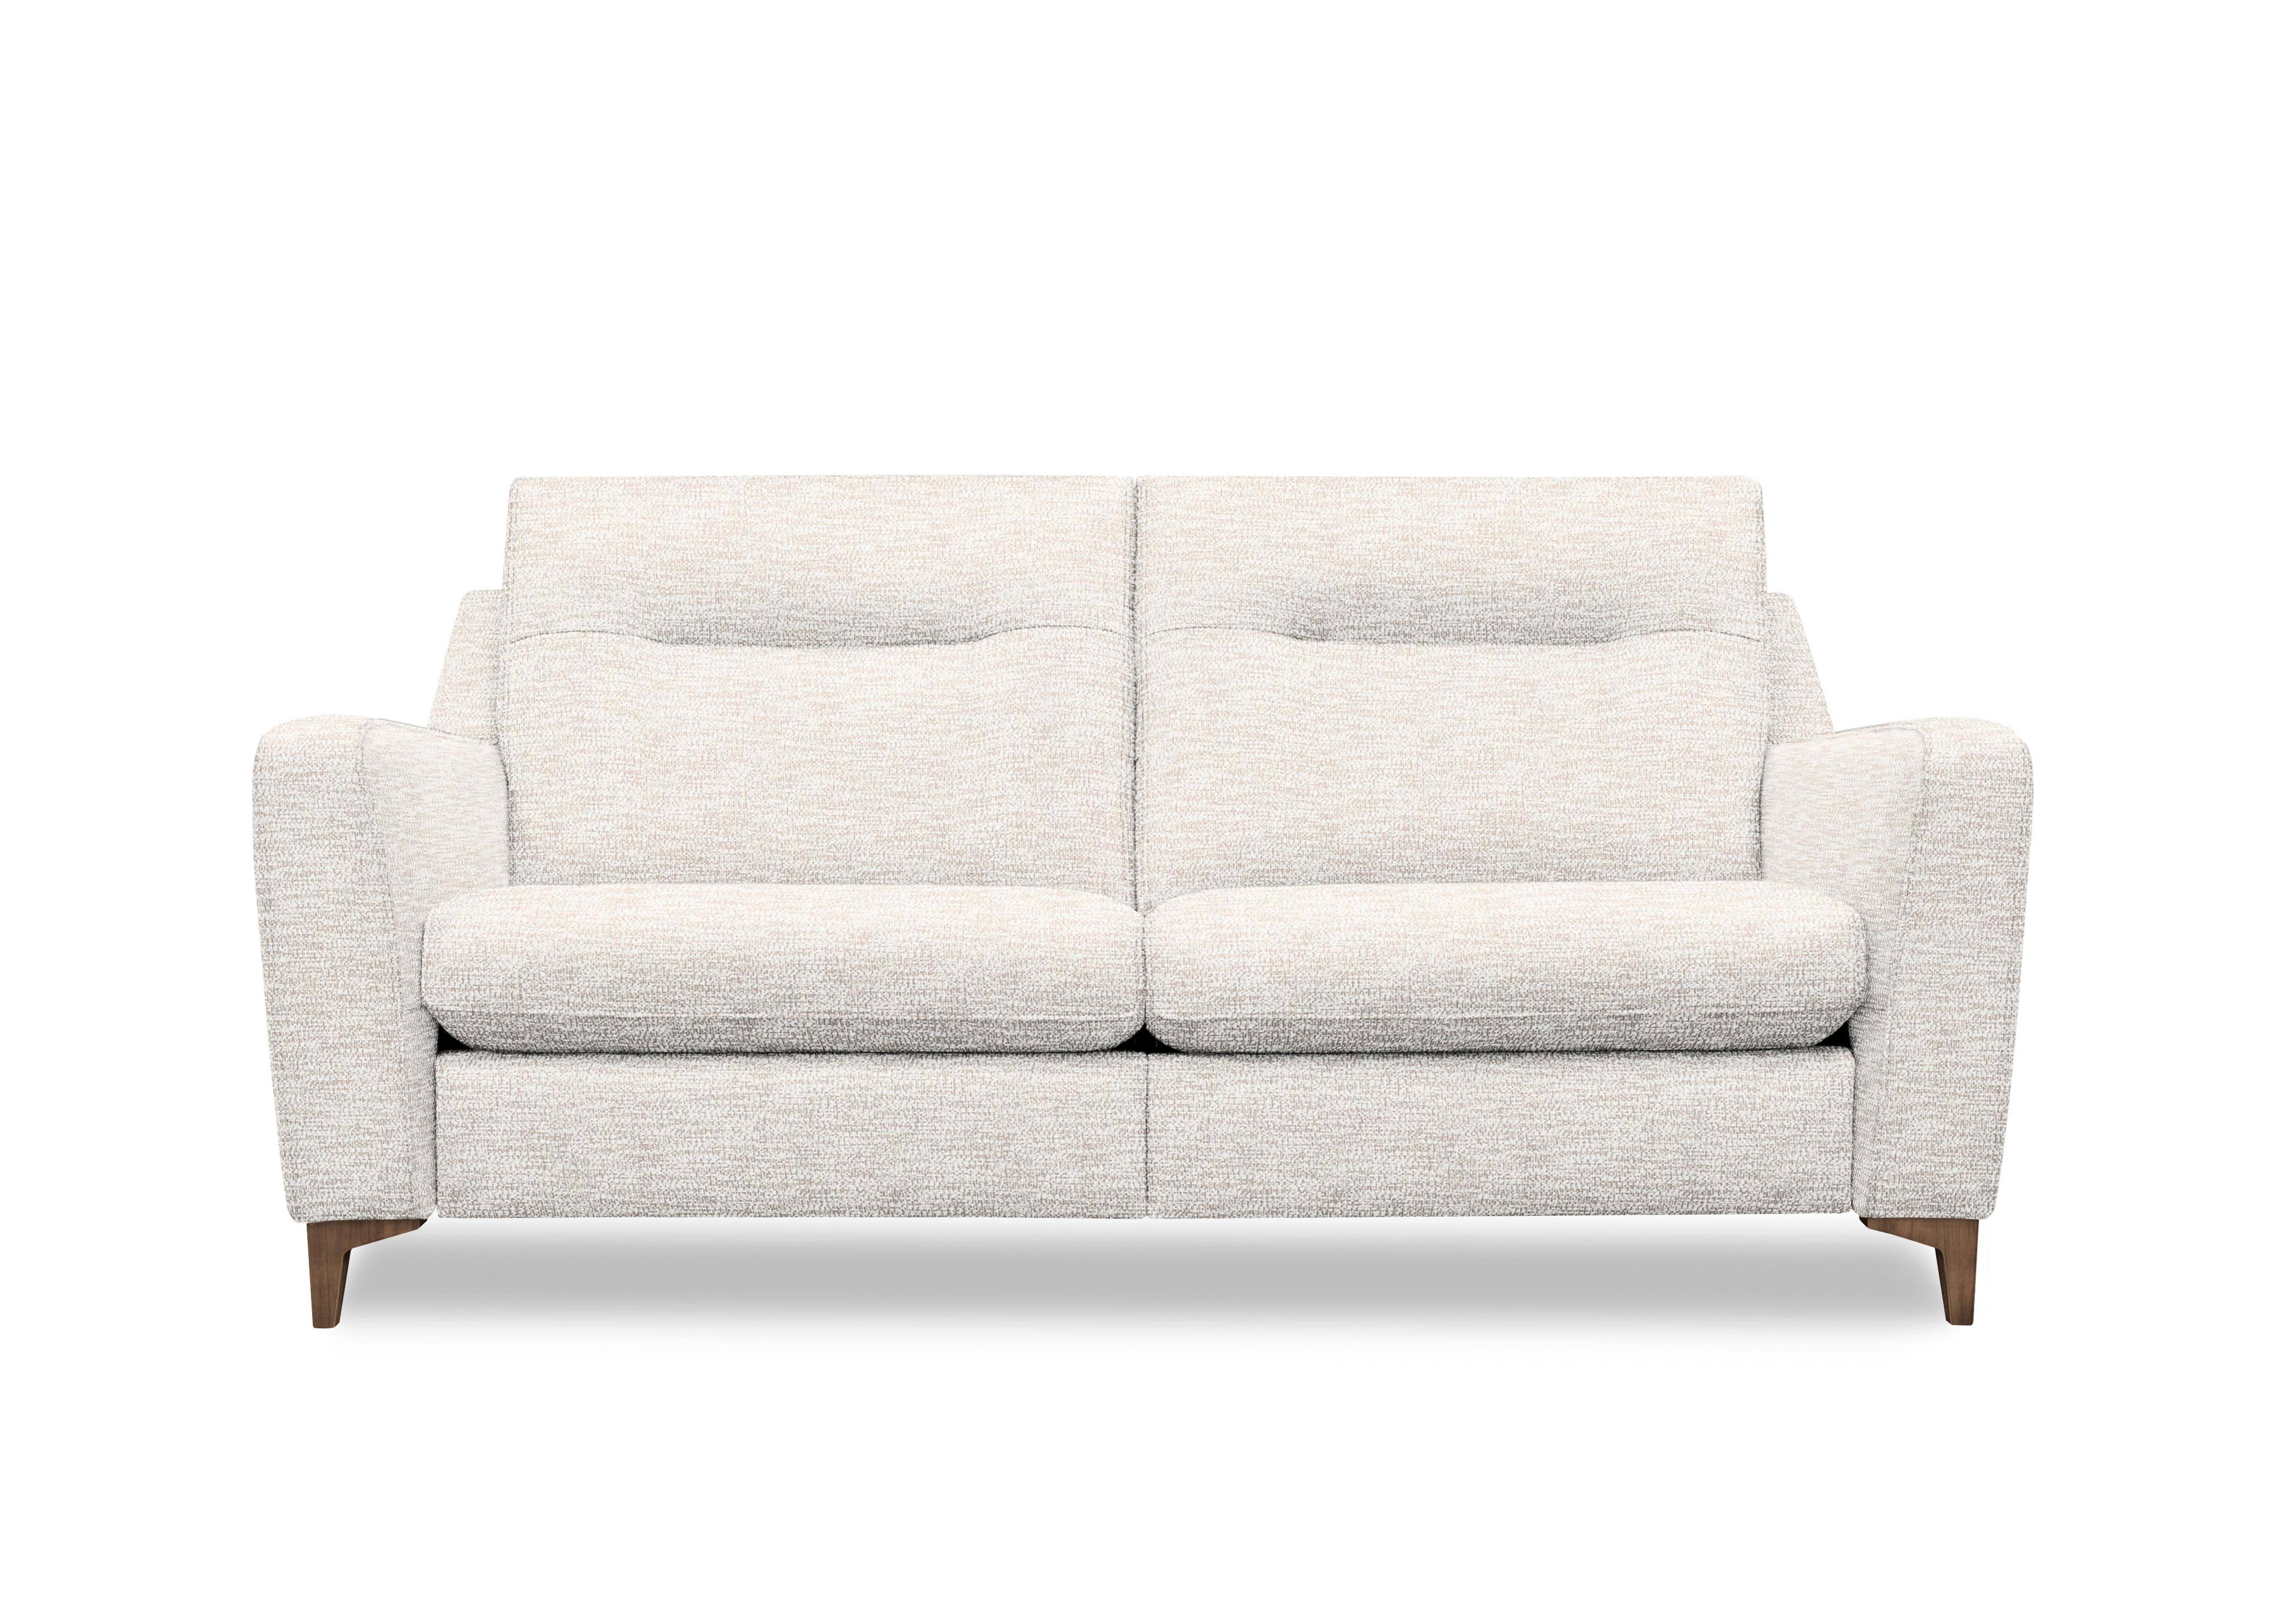 Arlo 3 Seater Fabric Sofa in C931 Rush Cream Wal Ft on Furniture Village